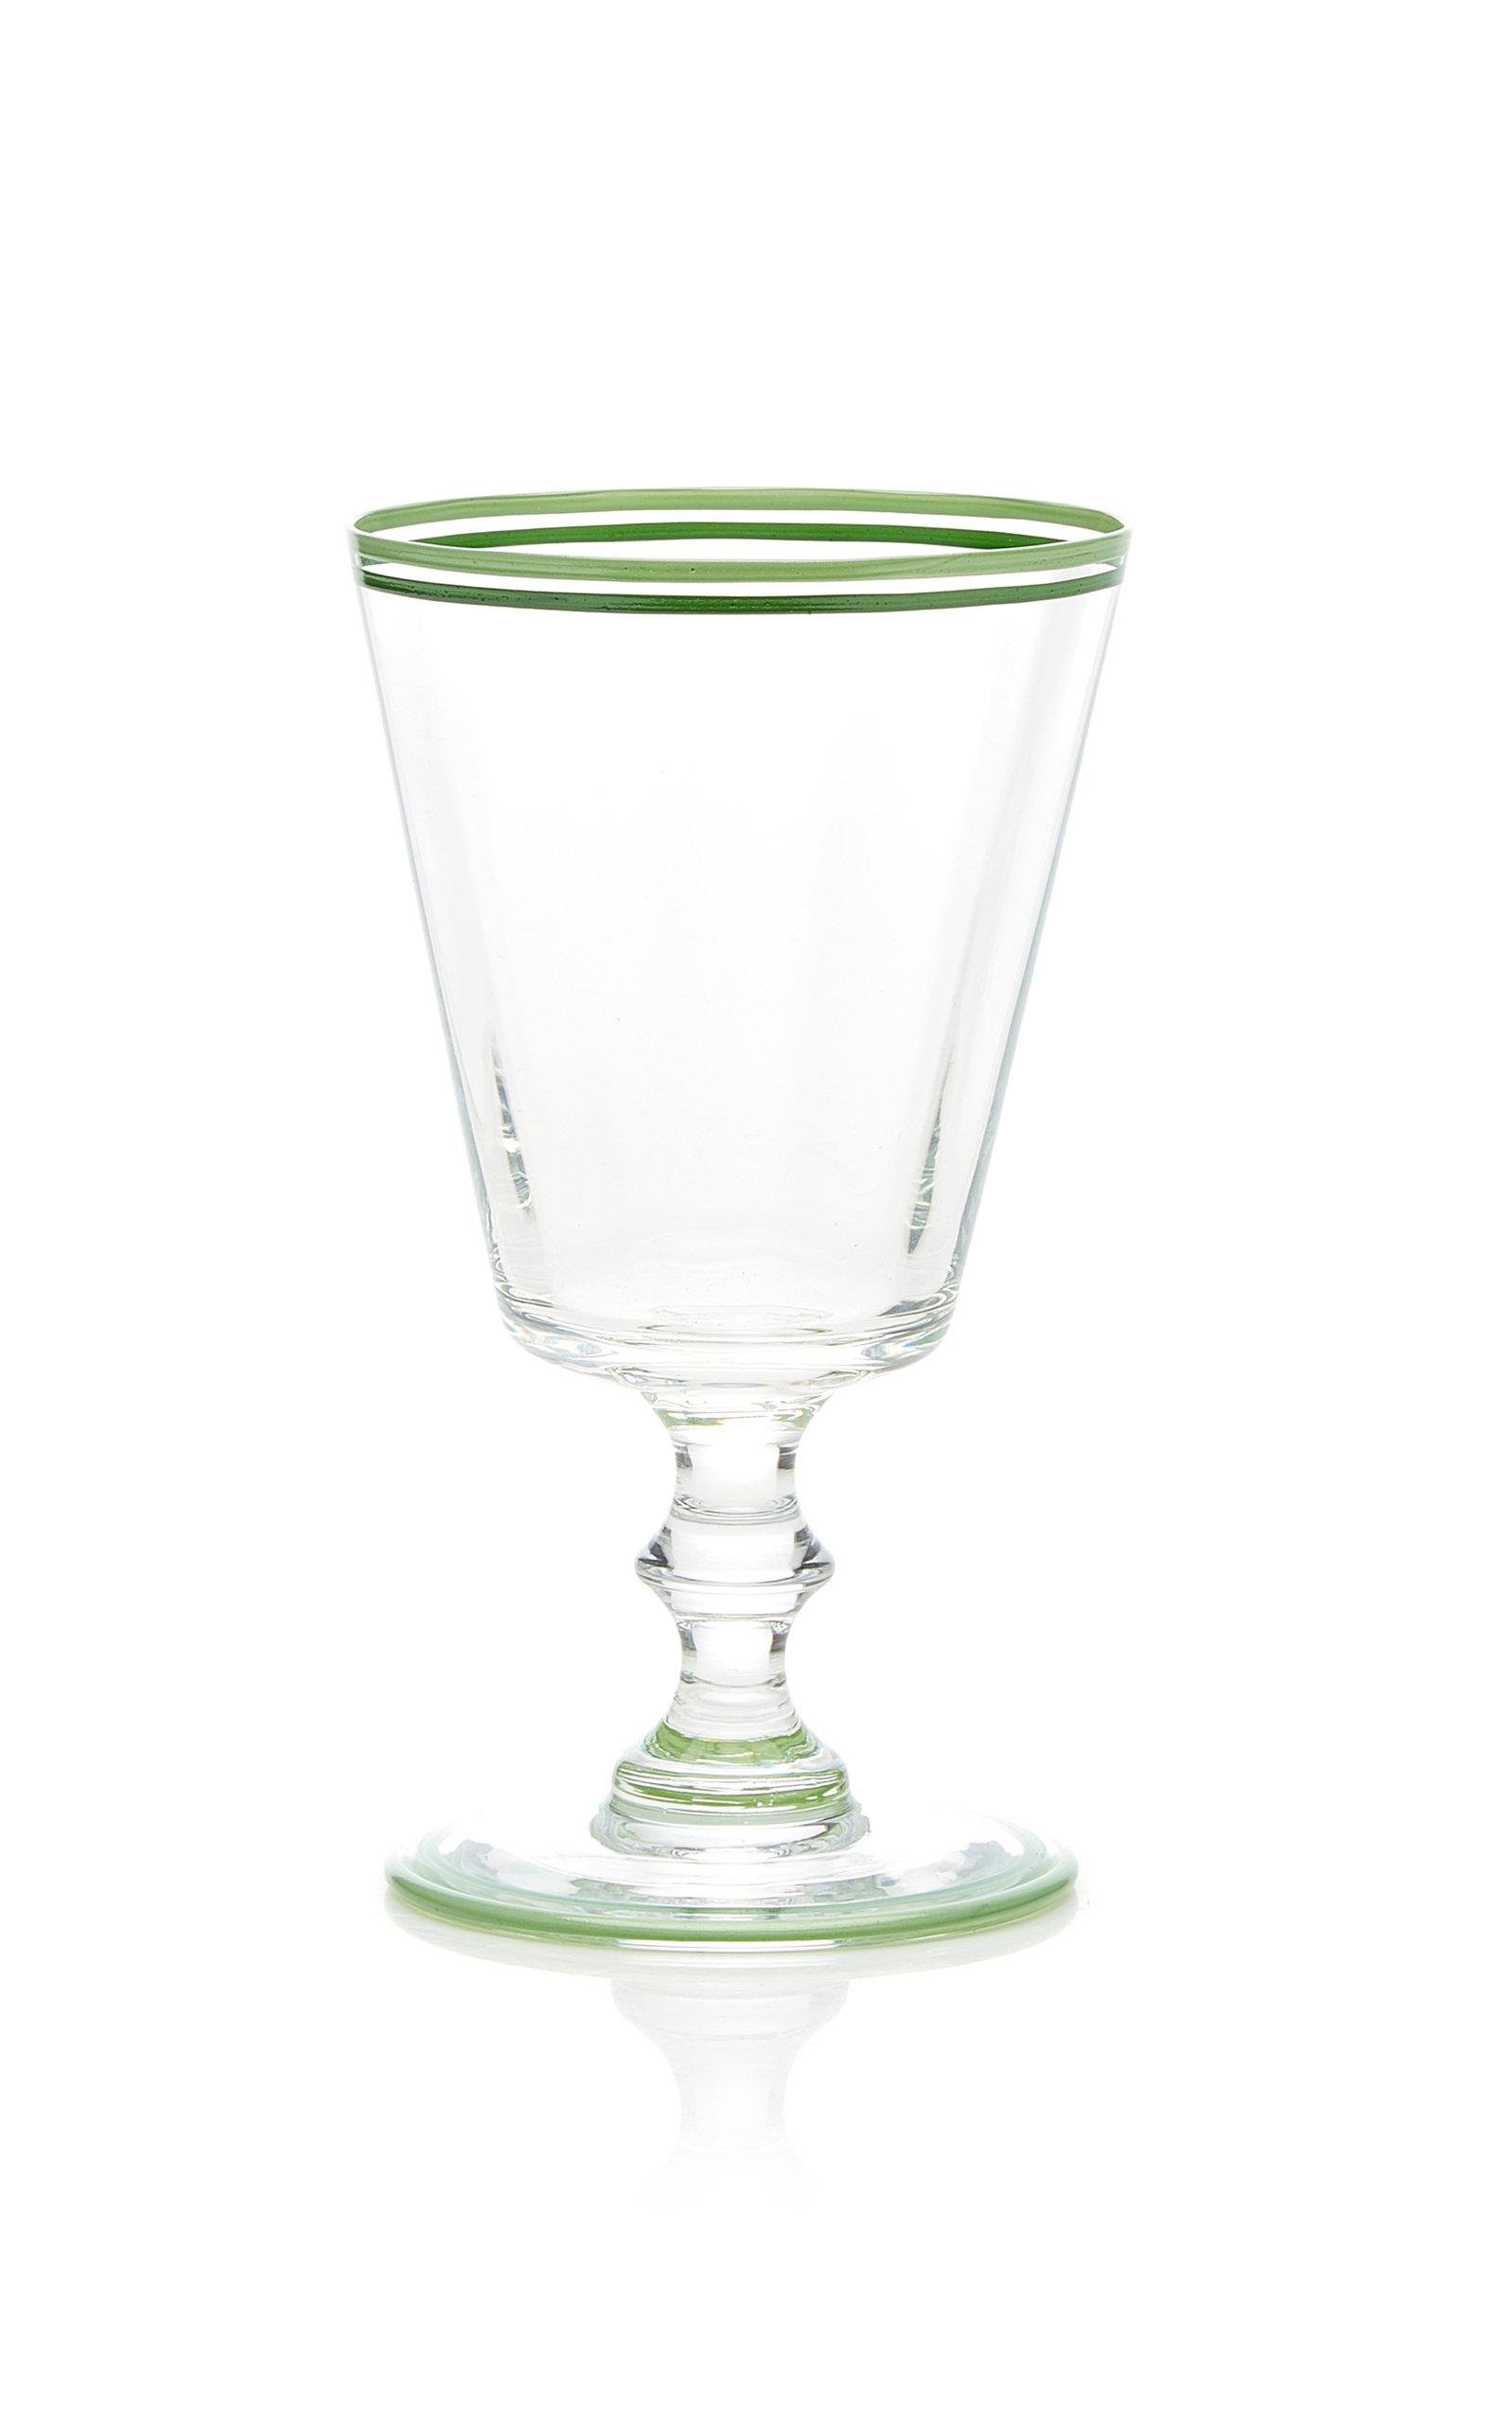 Moda Domus - Hand-Painted Double Rim Wine Glass - Green - Moda Operandi by MODA DOMUS